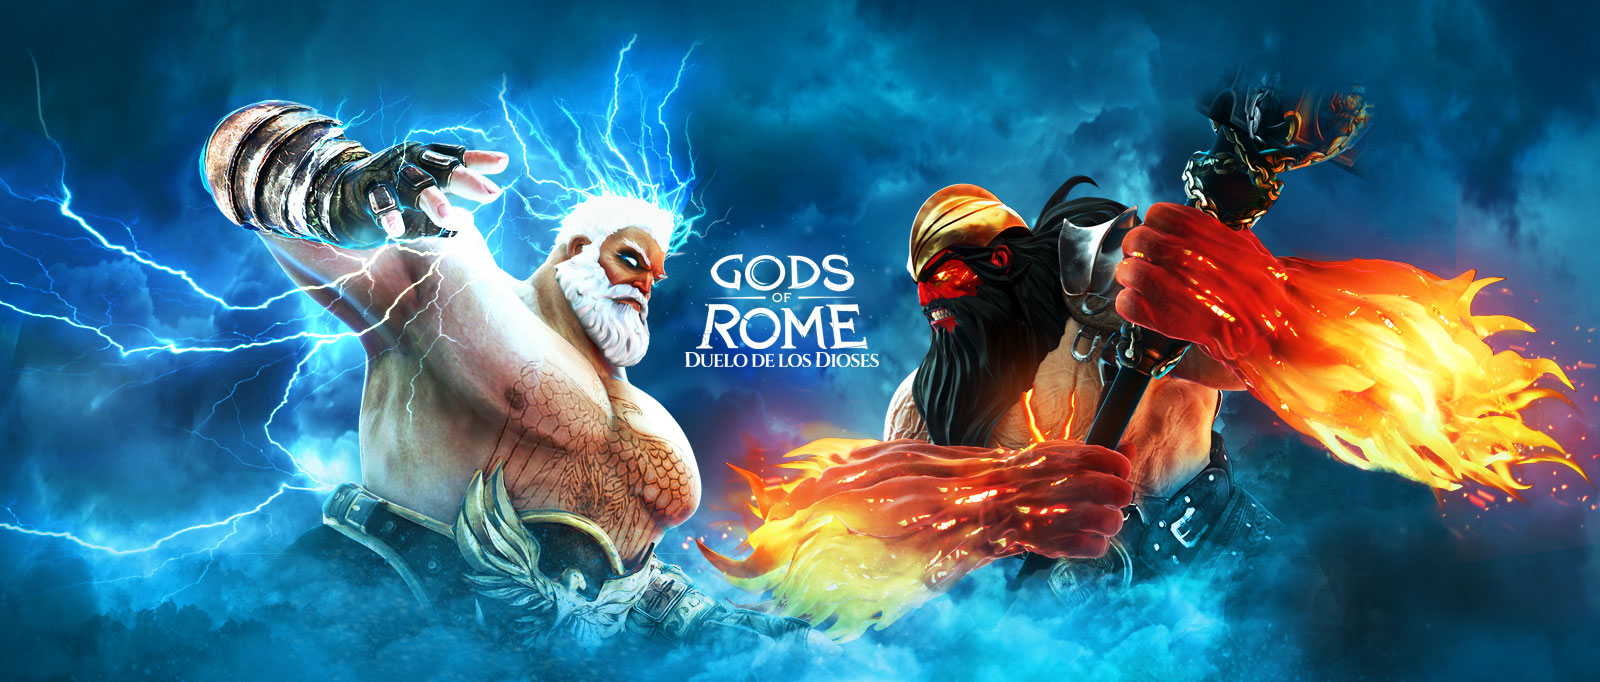 GODS OF ROME